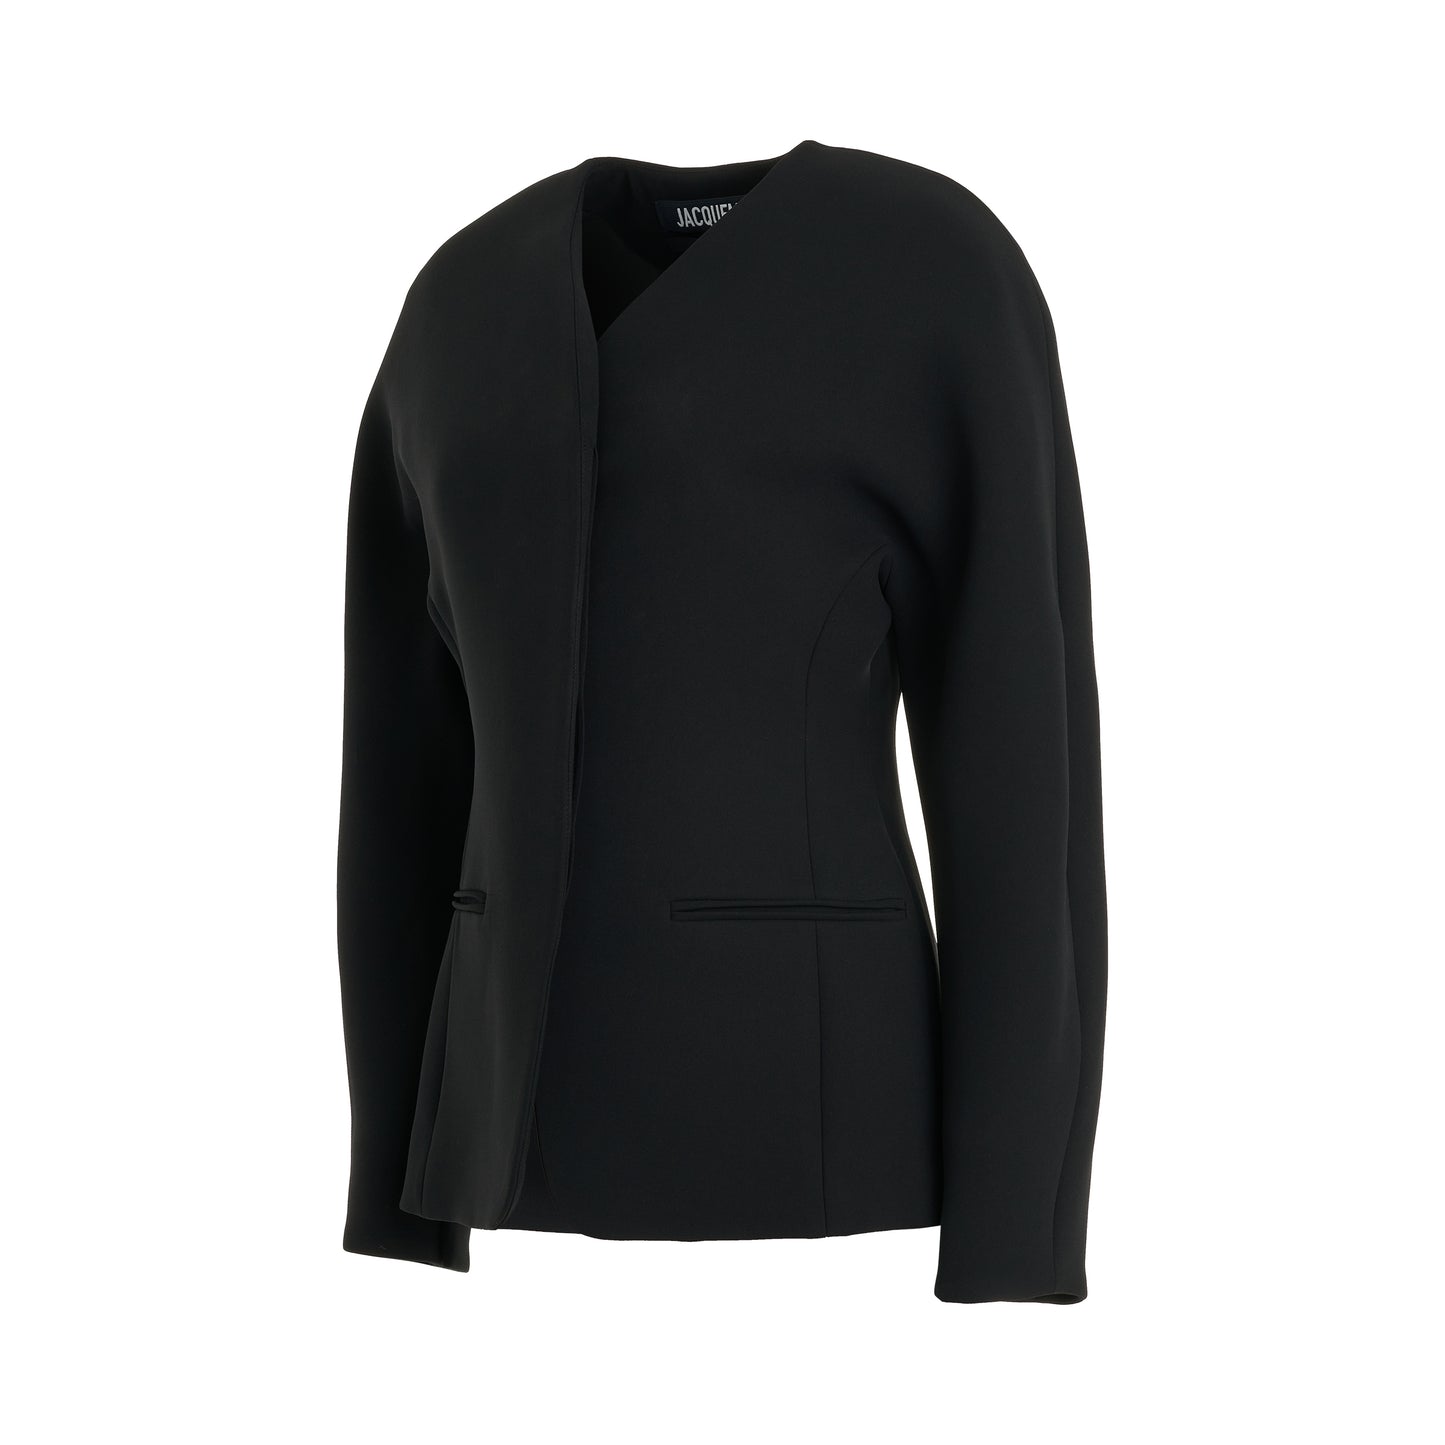 Ovalo Suit Jacket in Black